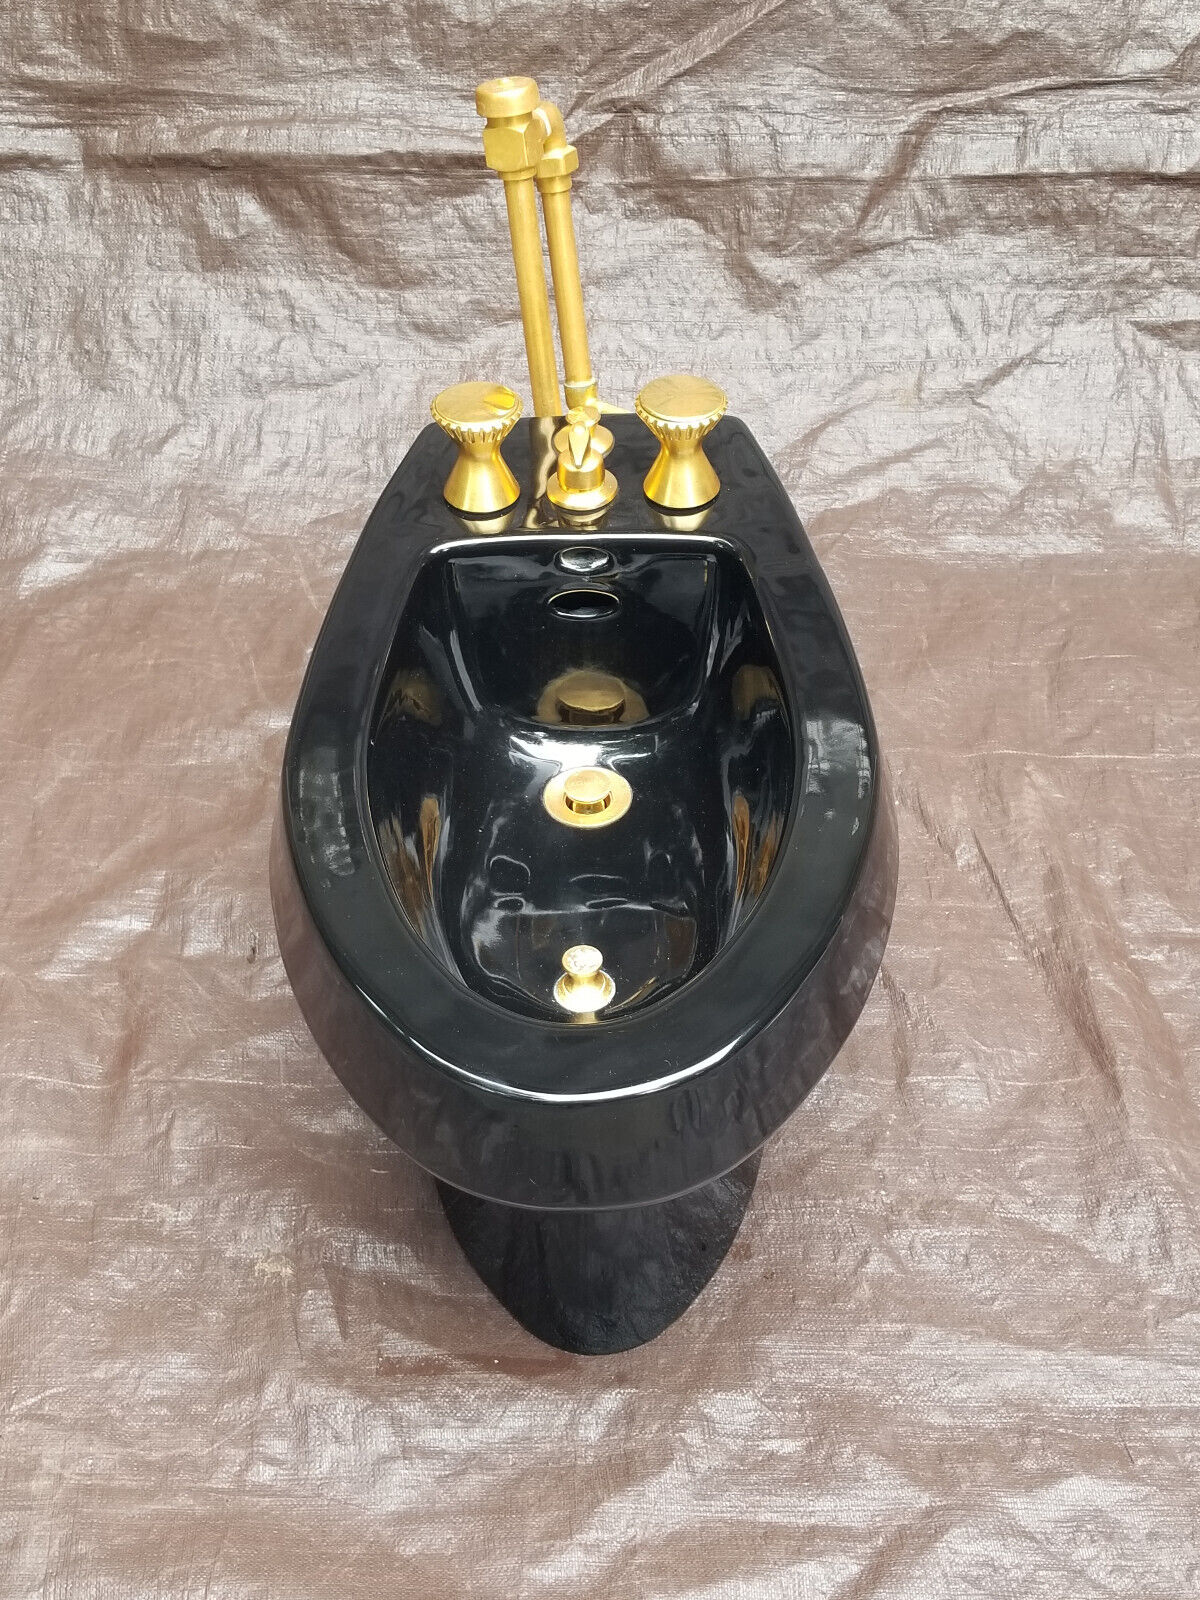 Used Black K4869 Kohler Bidet With Gold Kohler Faucet Assembly